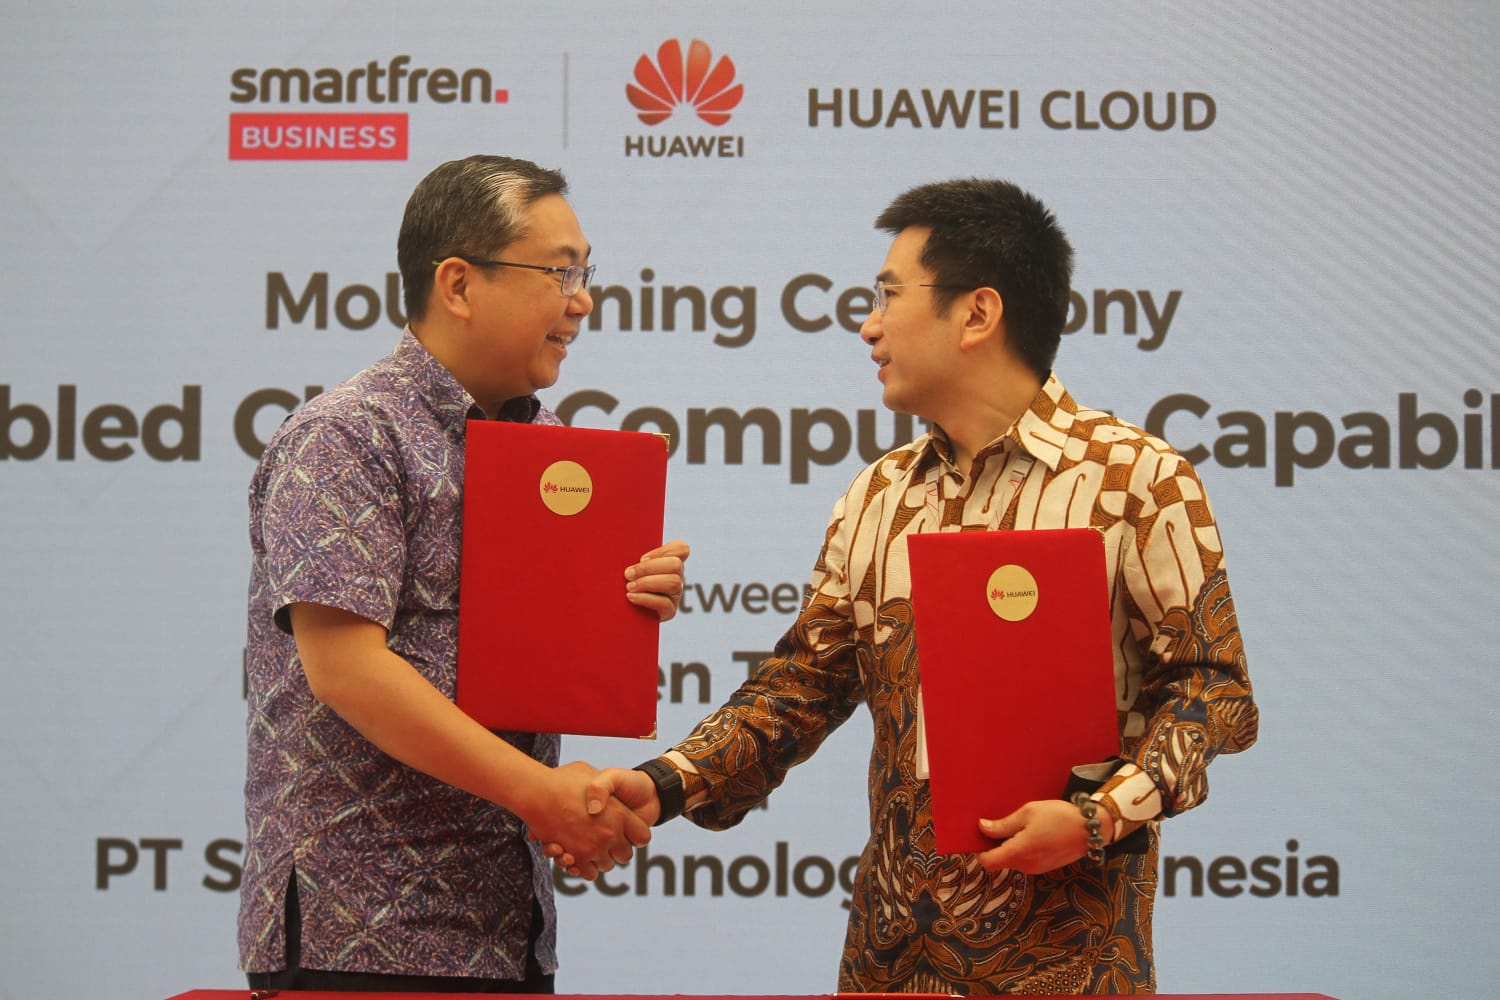 Smartfren melaksanakan kerja sama dengan Huawei untuk mempercepat pertumbuhan layanan digital berbentuk cloud (Ashar/SinPo.id)